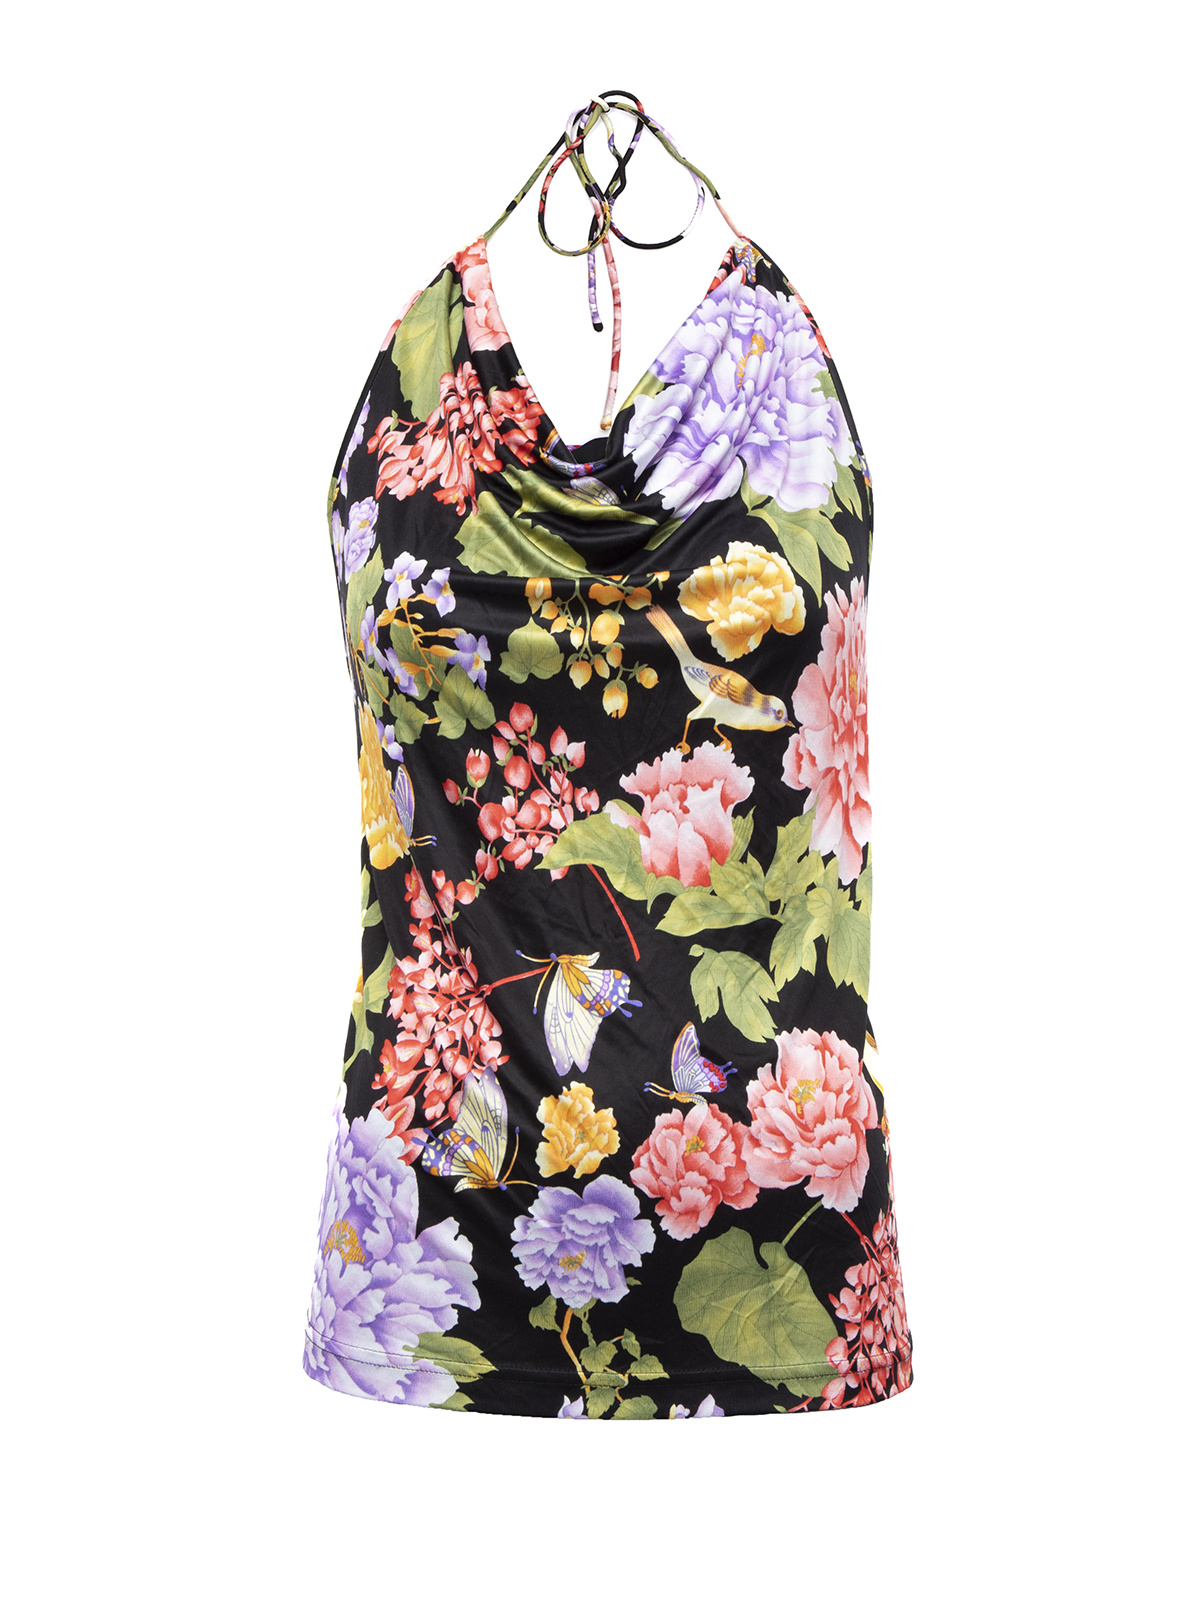 Dolce & Gabbana, Butterfly & Floral Print Halter Top